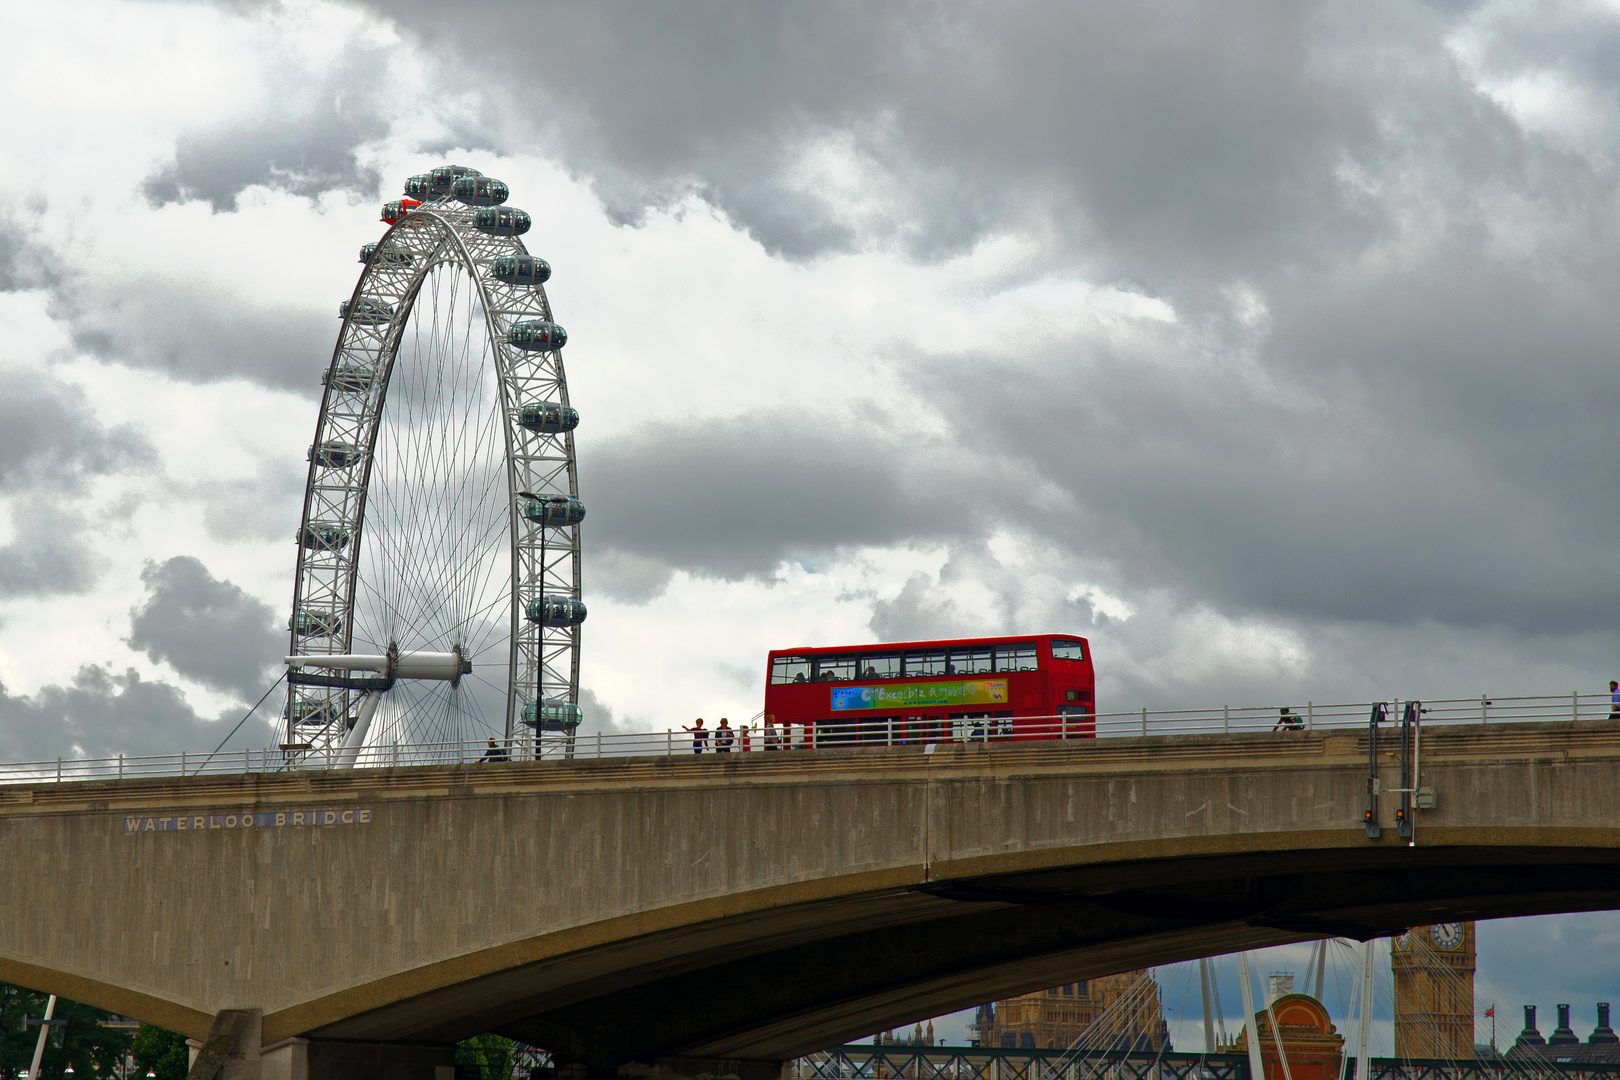 The Eye of London